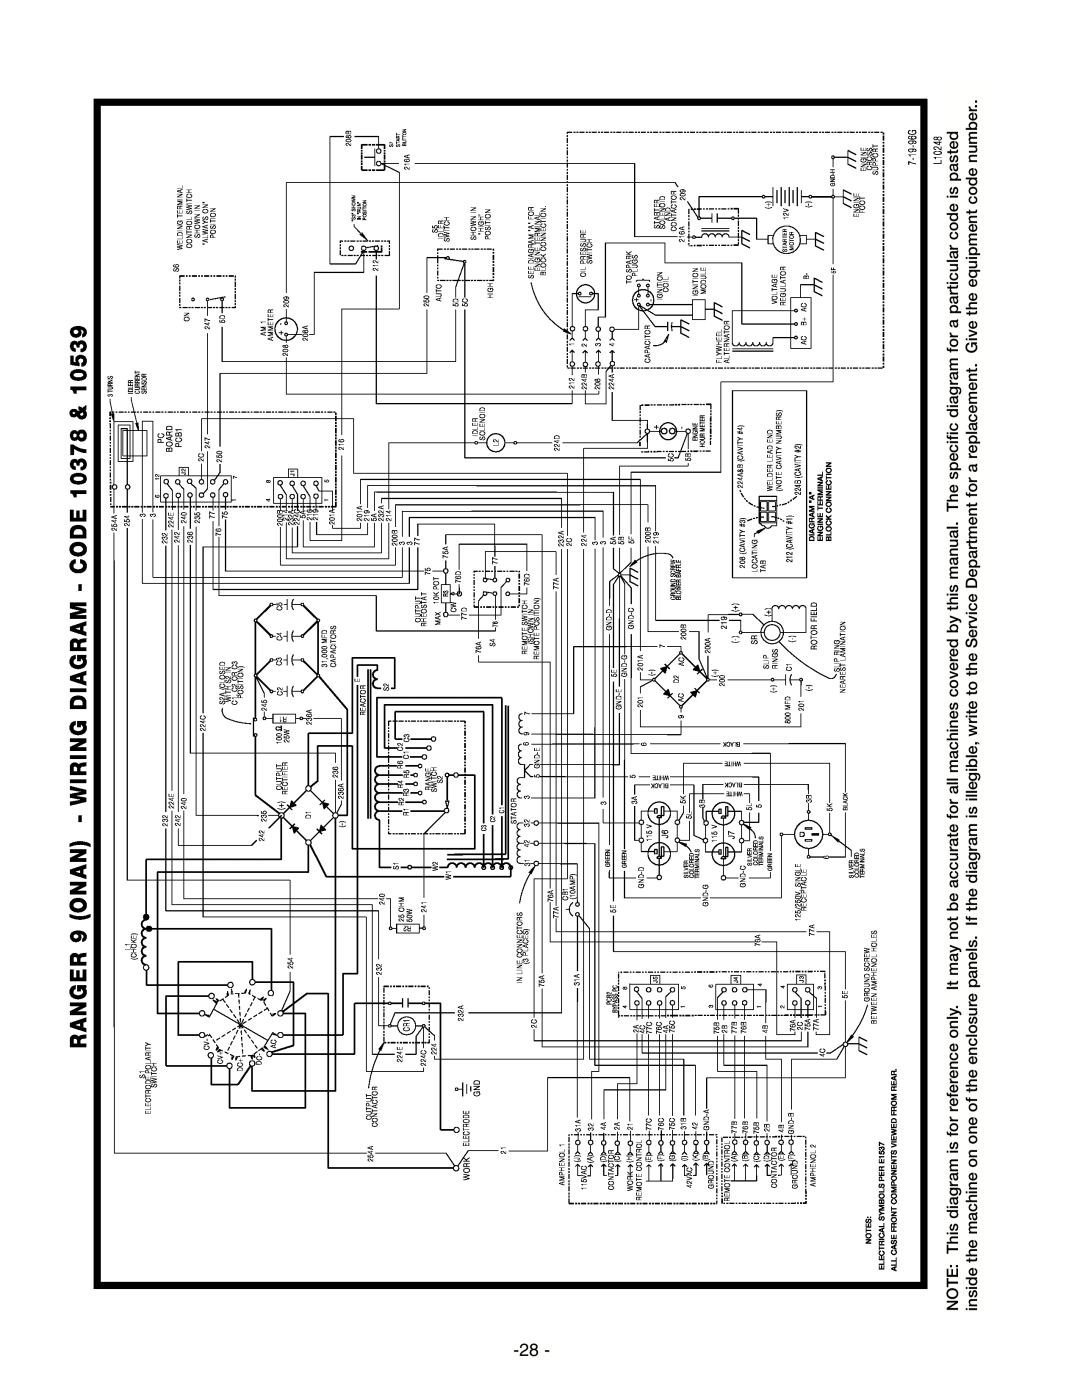 Lincoln Electric IM511-D manual RANGER 9 ONAN, Wiring Diagram - Code, 7-19-96G, L10248 